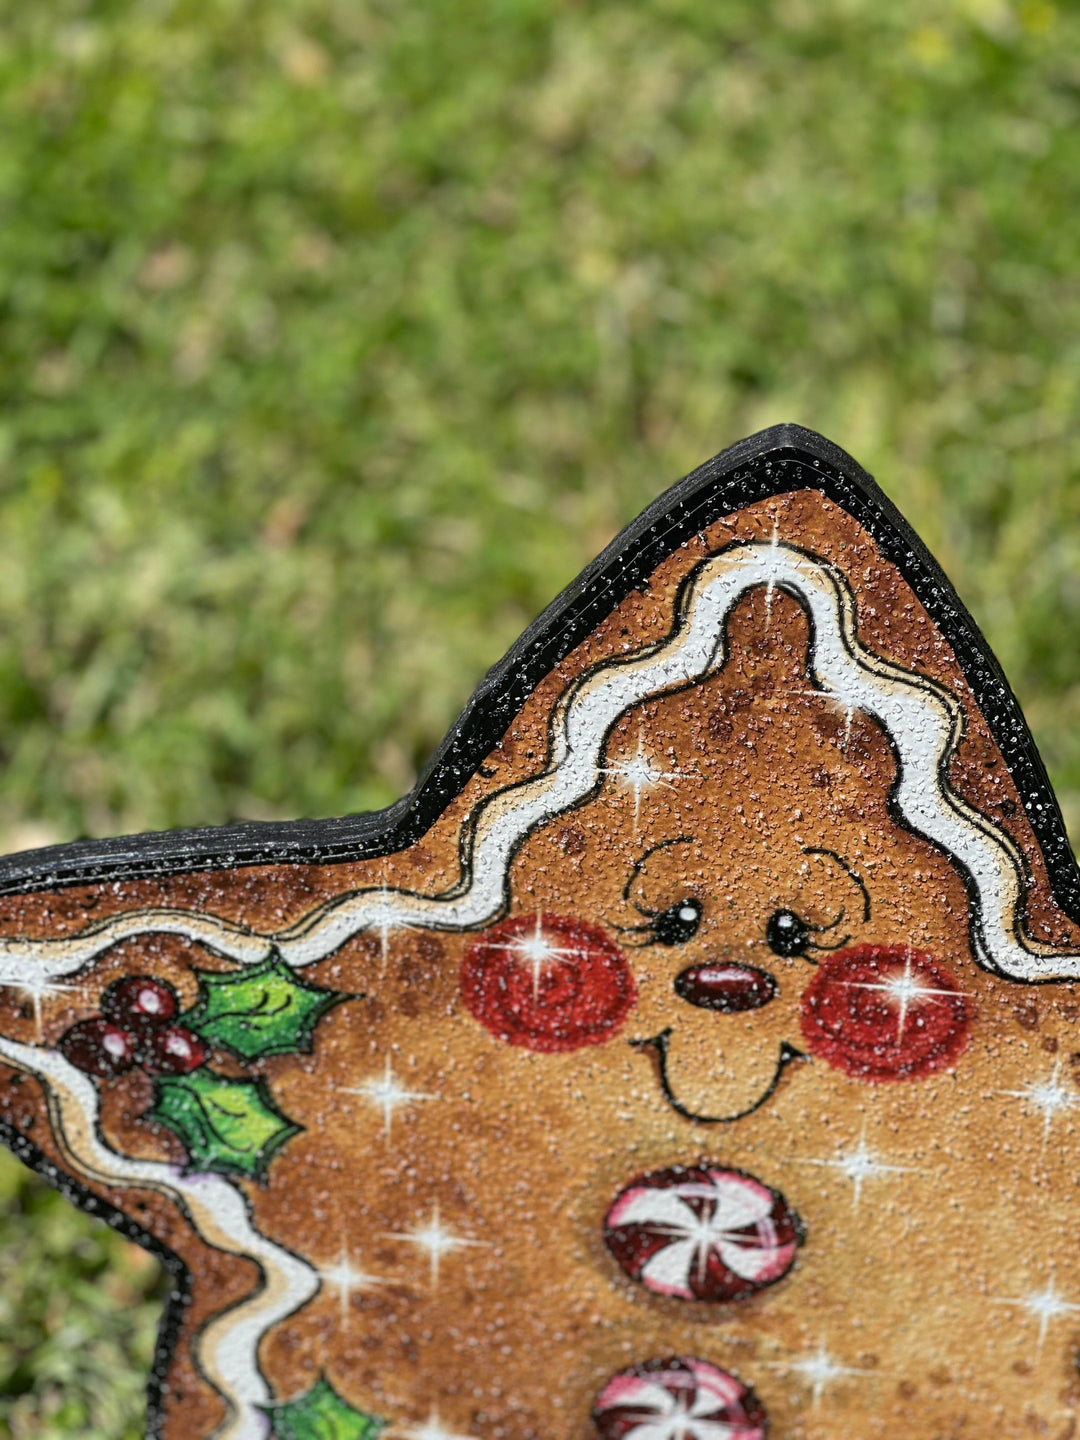 Gingerbread Star Cookie Christmas yard Art